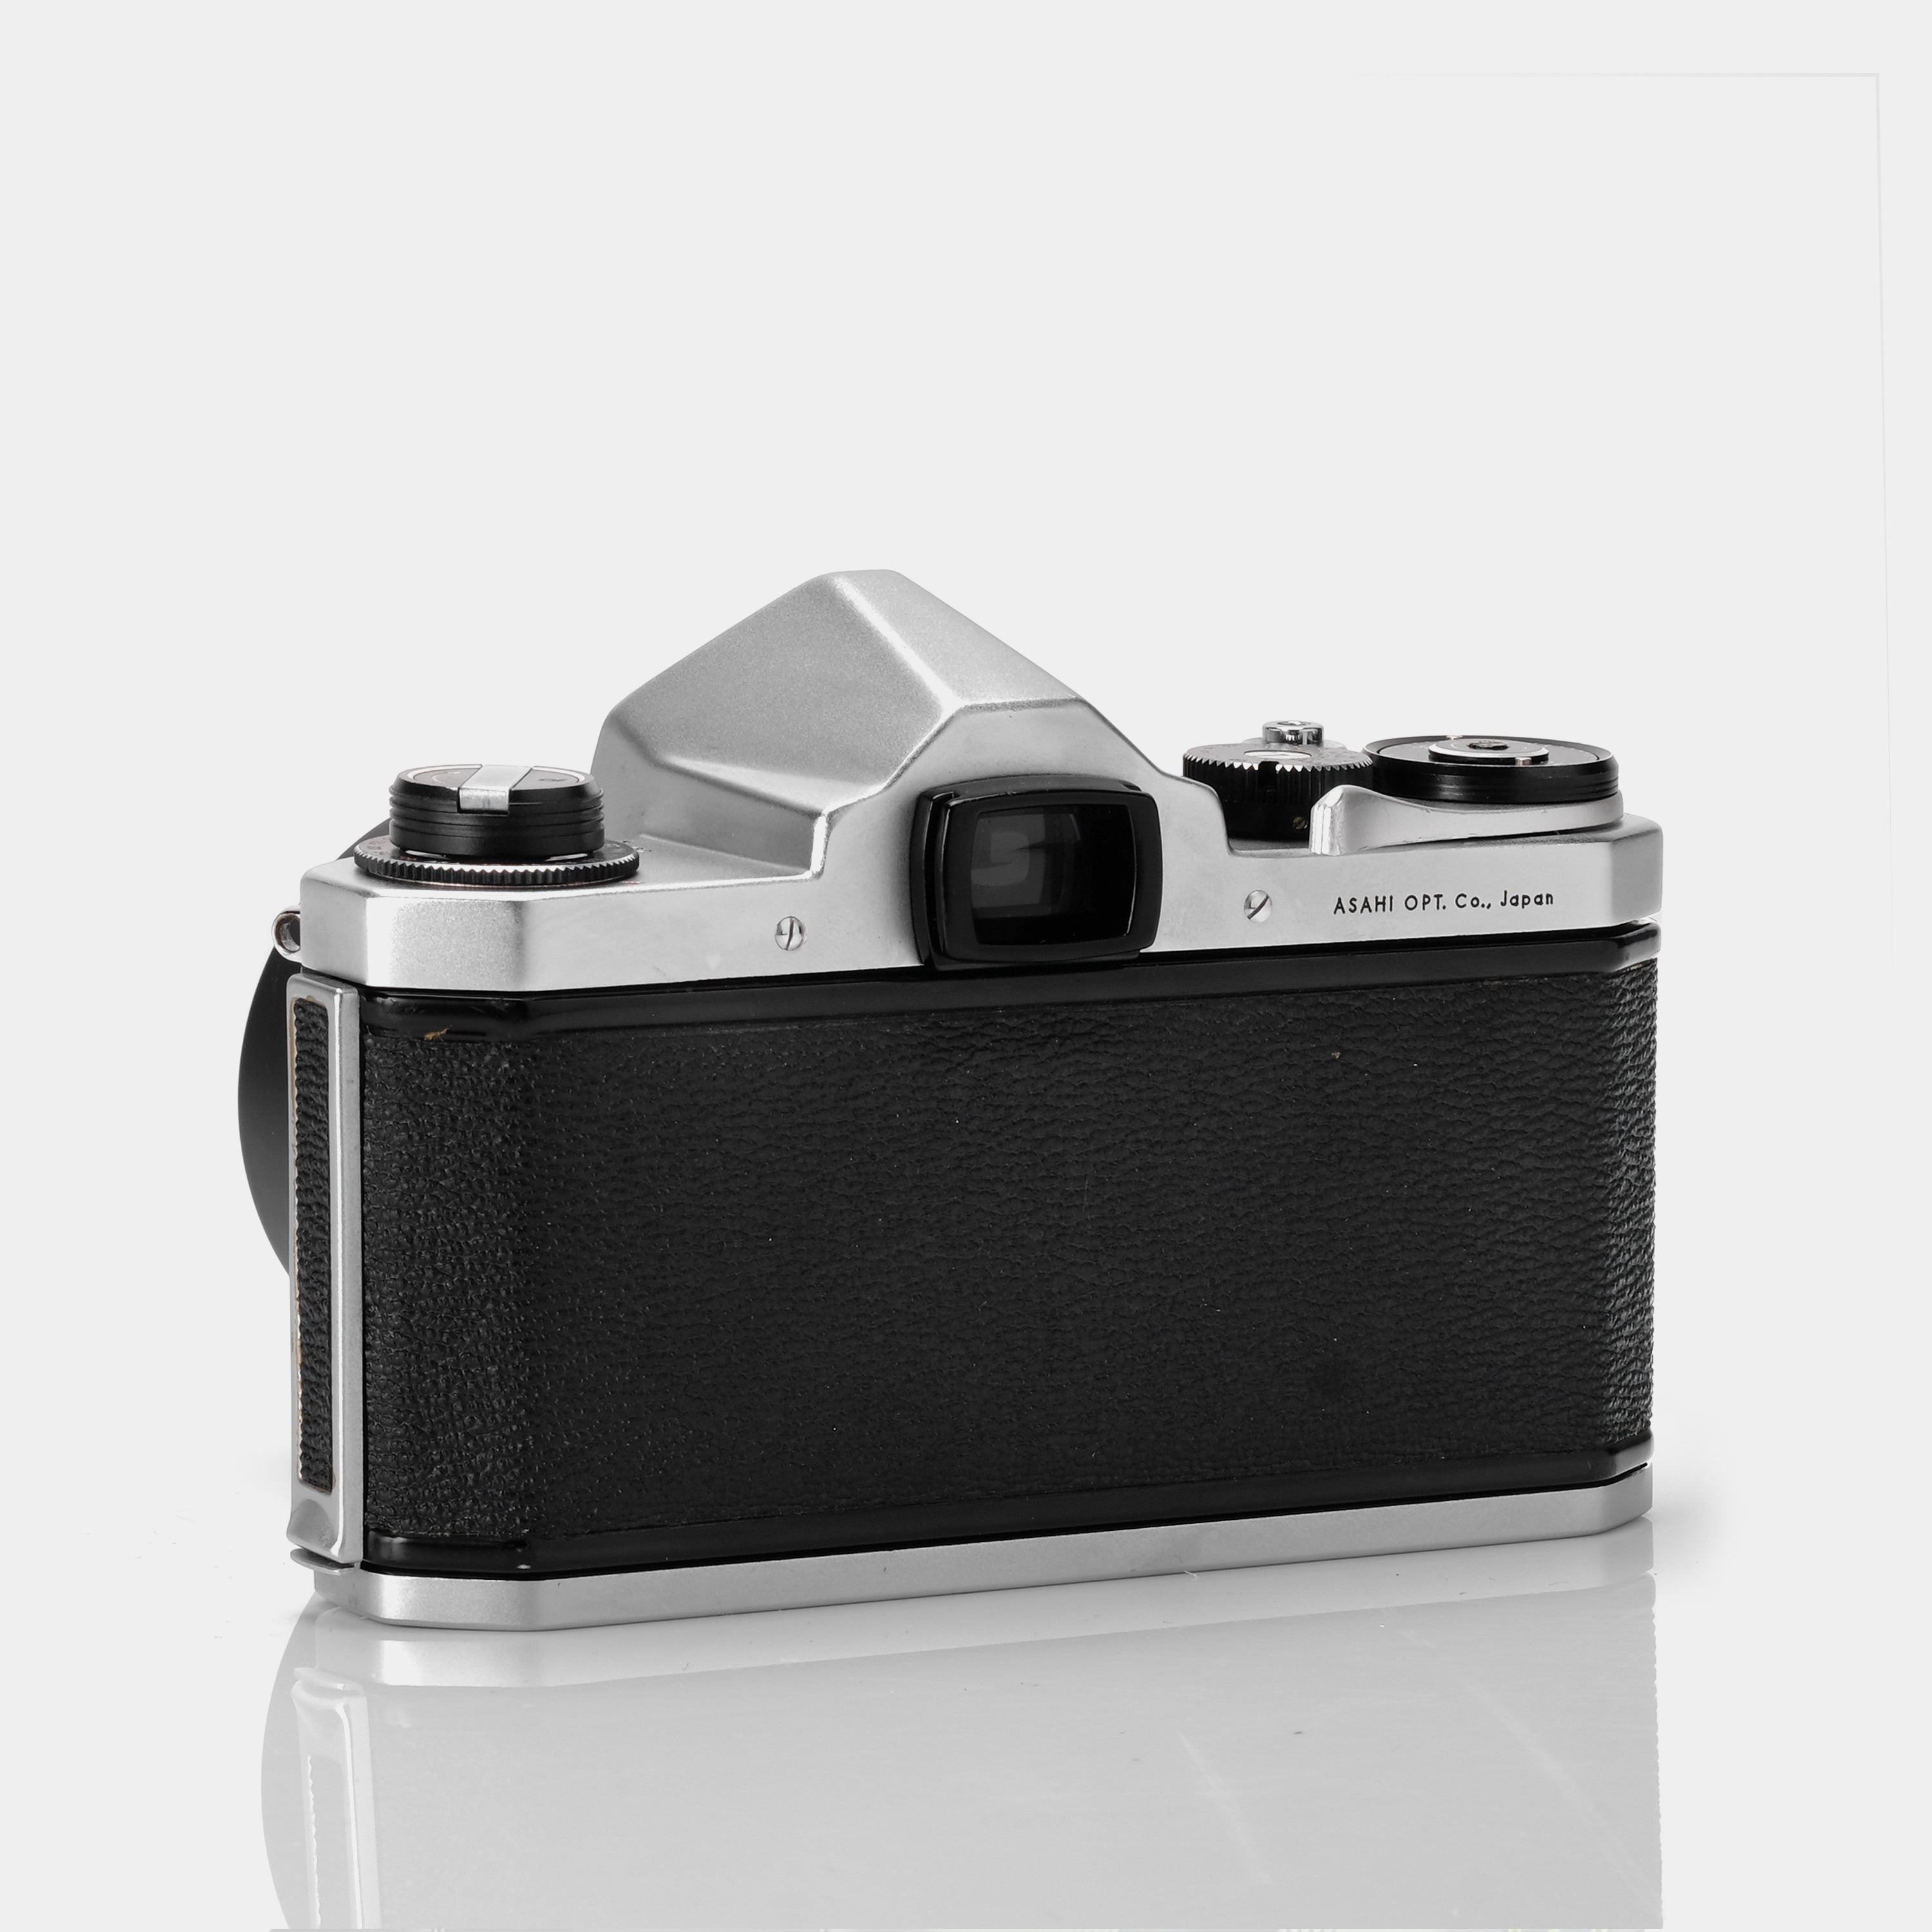 Asahi Pentax S3 35mm SLR Film Camera